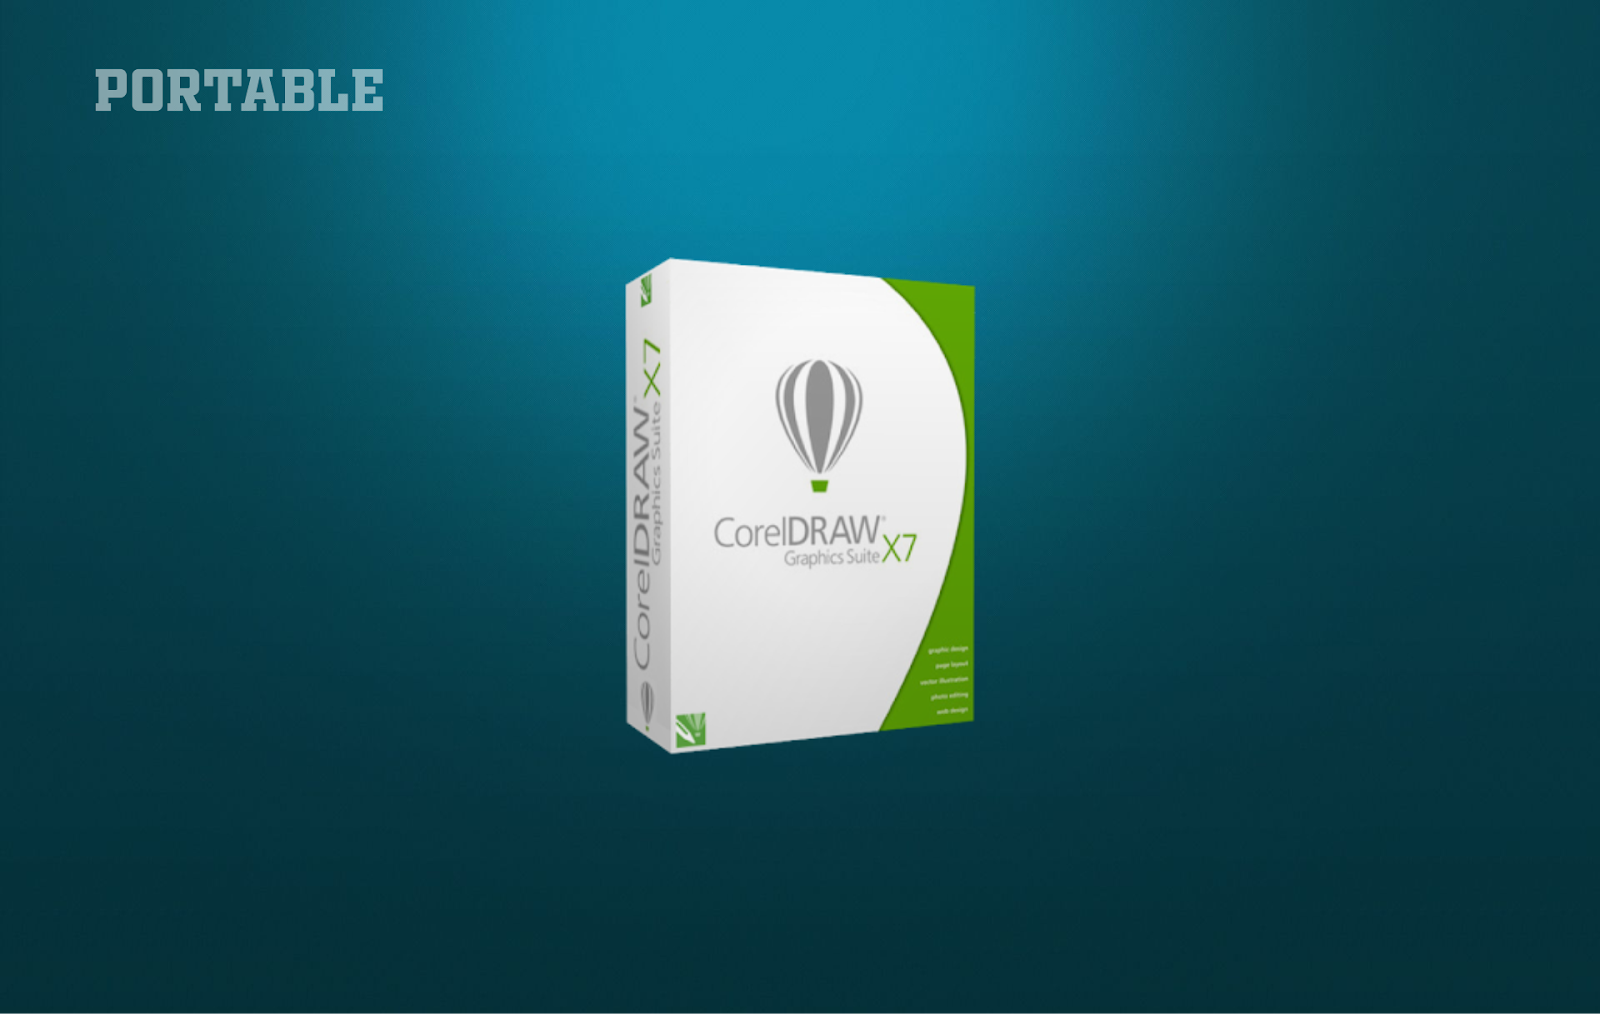 Coreldraw x7. Coreldraw Portable. Coreldraw 7. Coreldraw 7 Freeware Portable. Corel x3